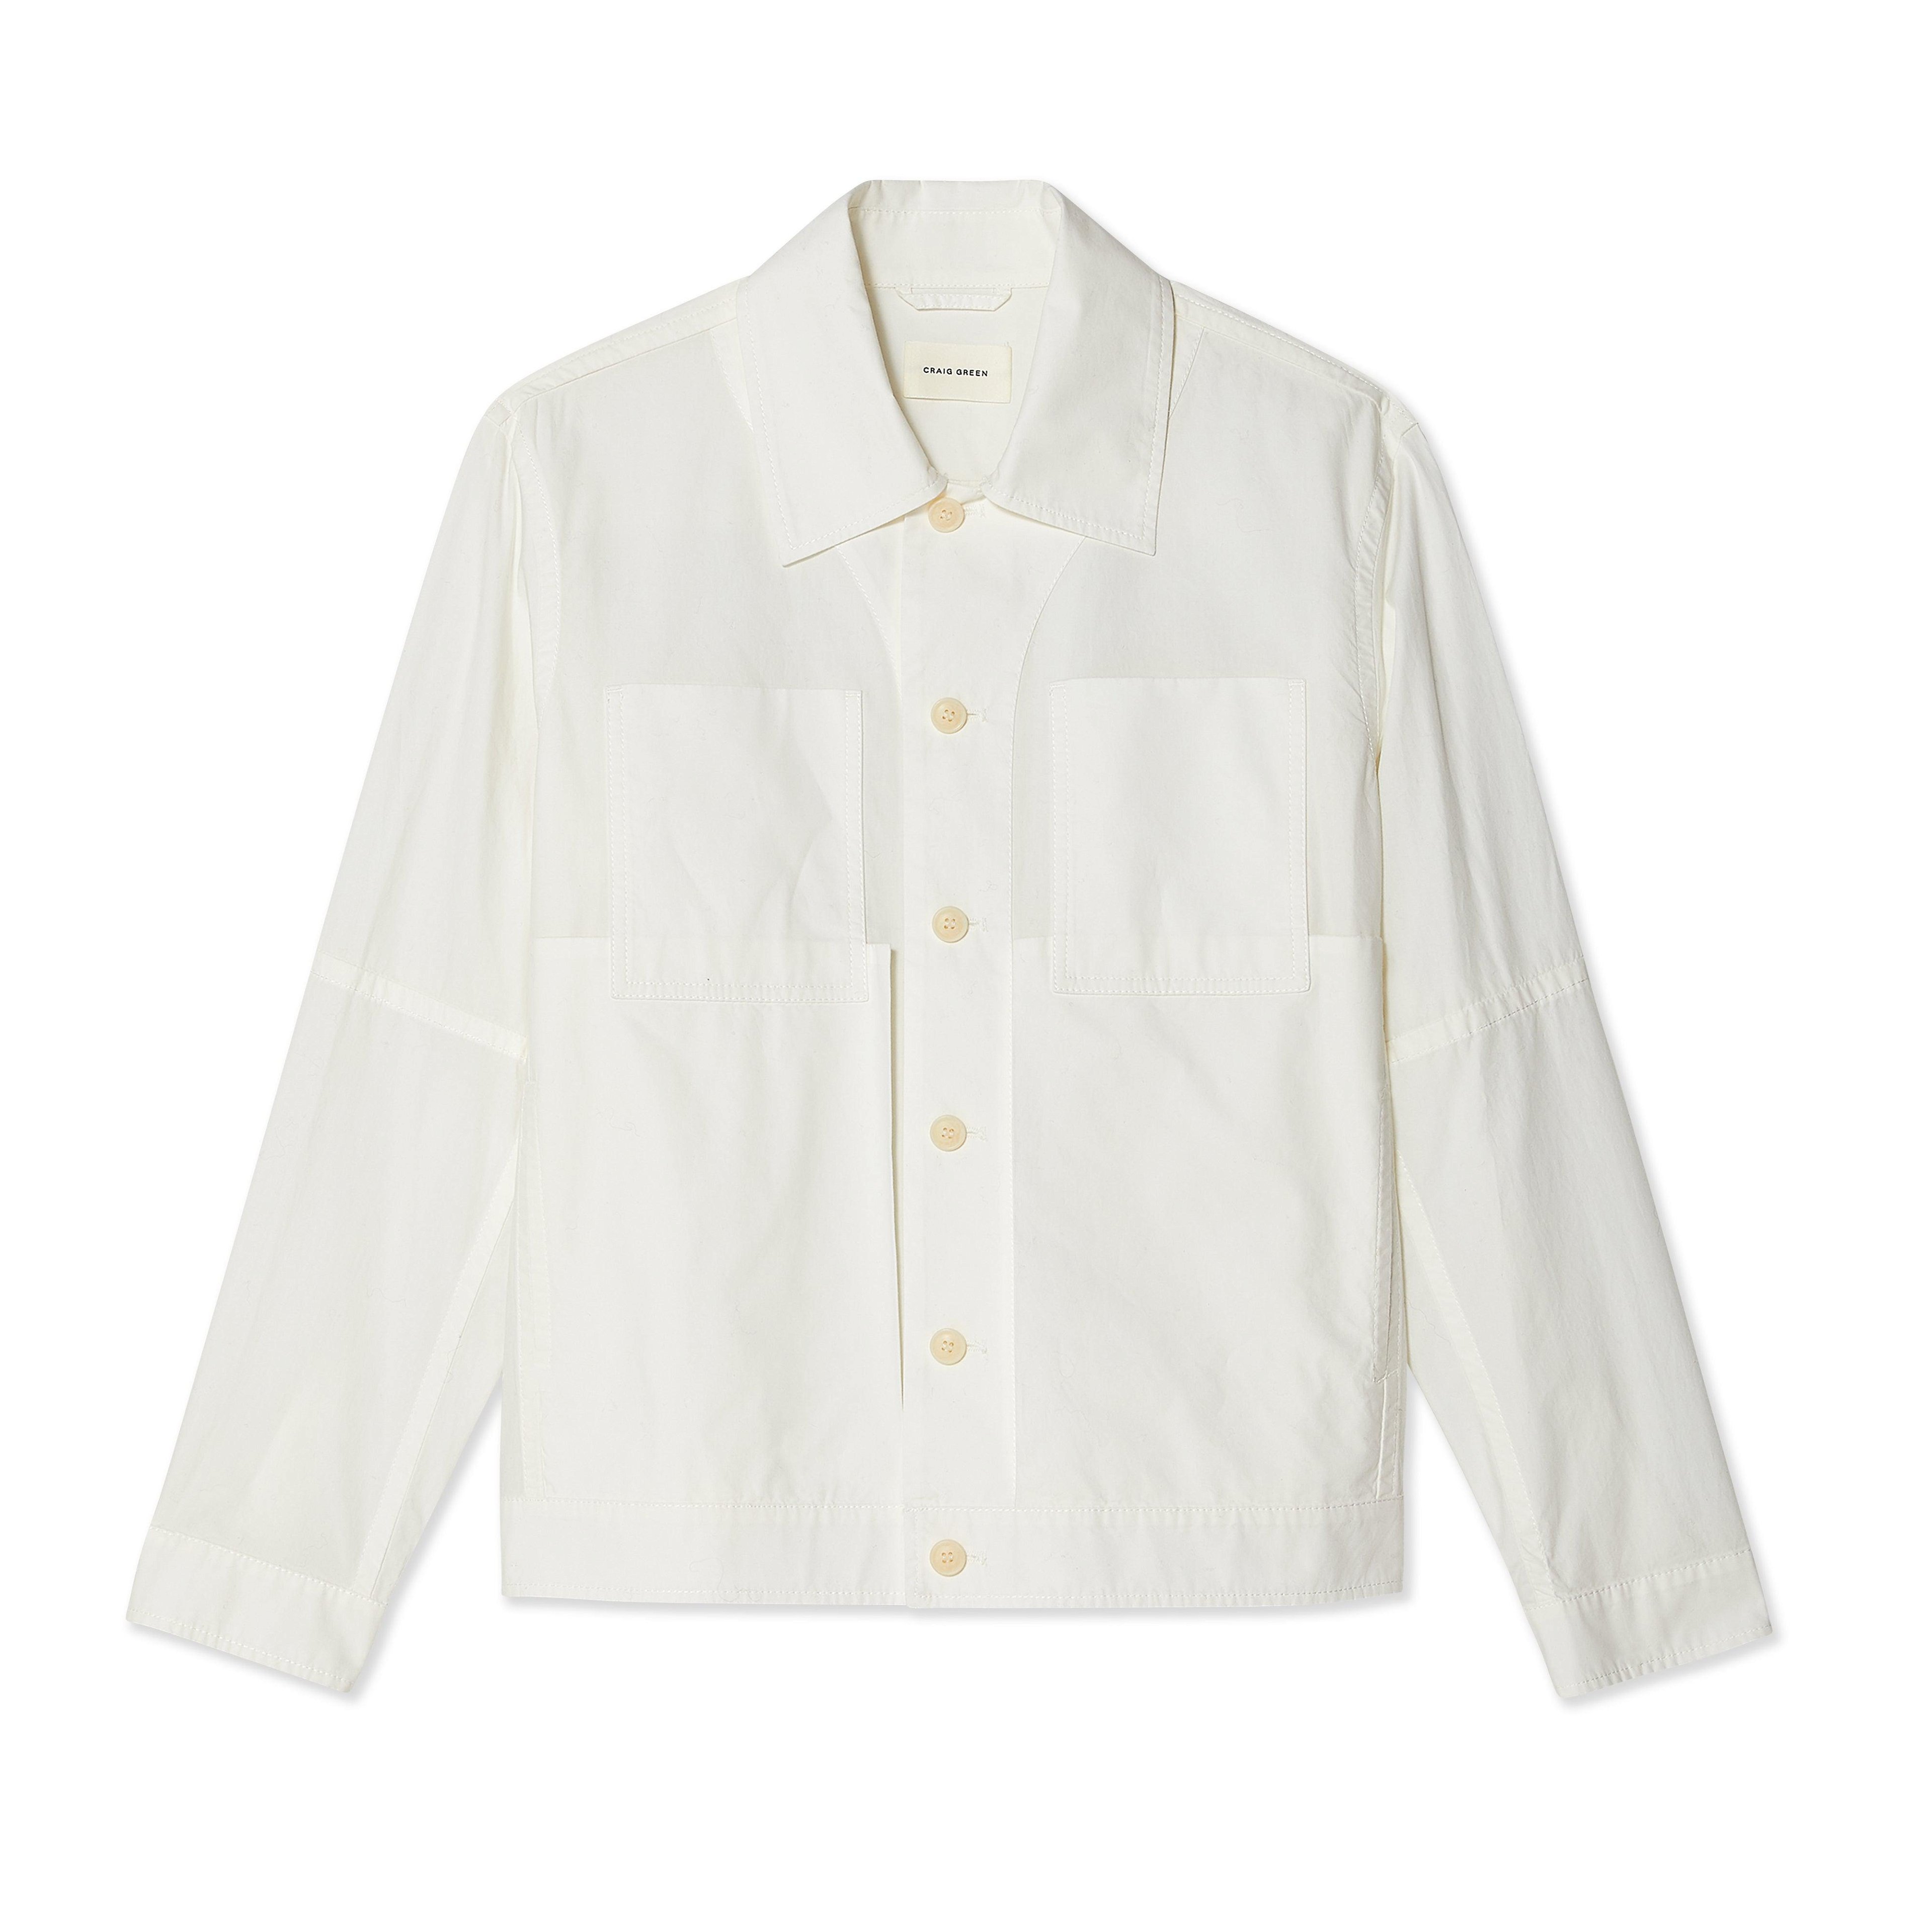 Craig Green Men's Worker Jacket (White) by CGREEN